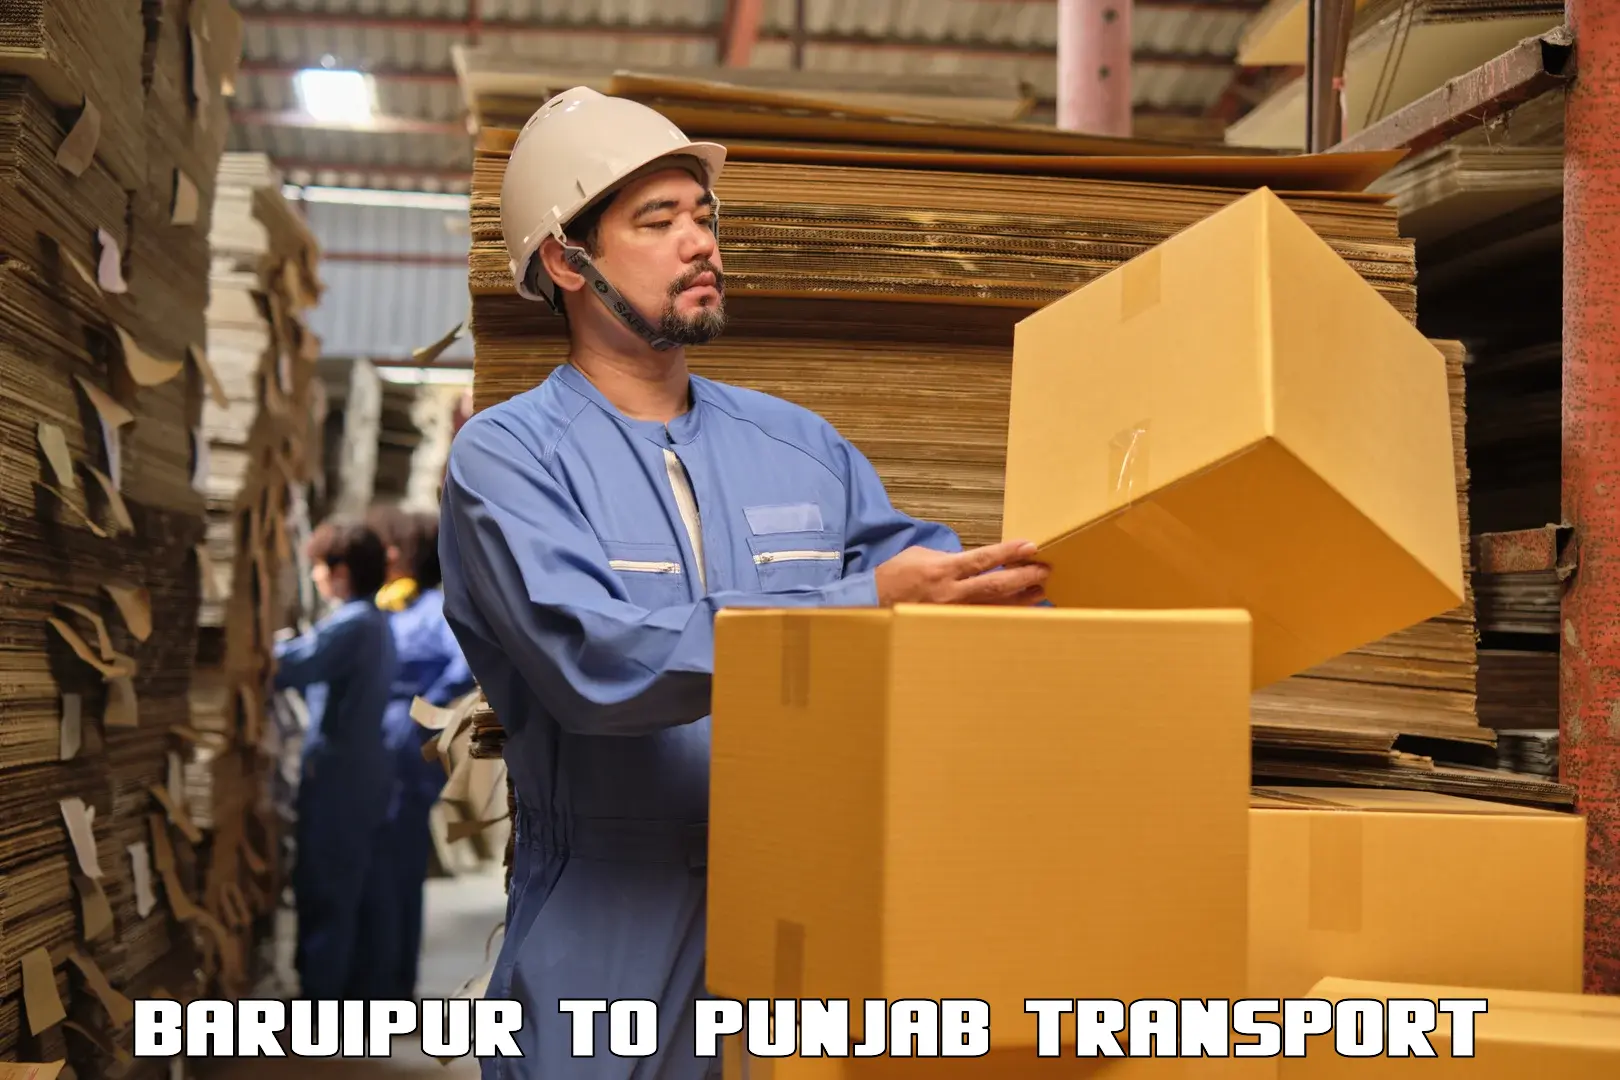 Container transport service Baruipur to Muktsar